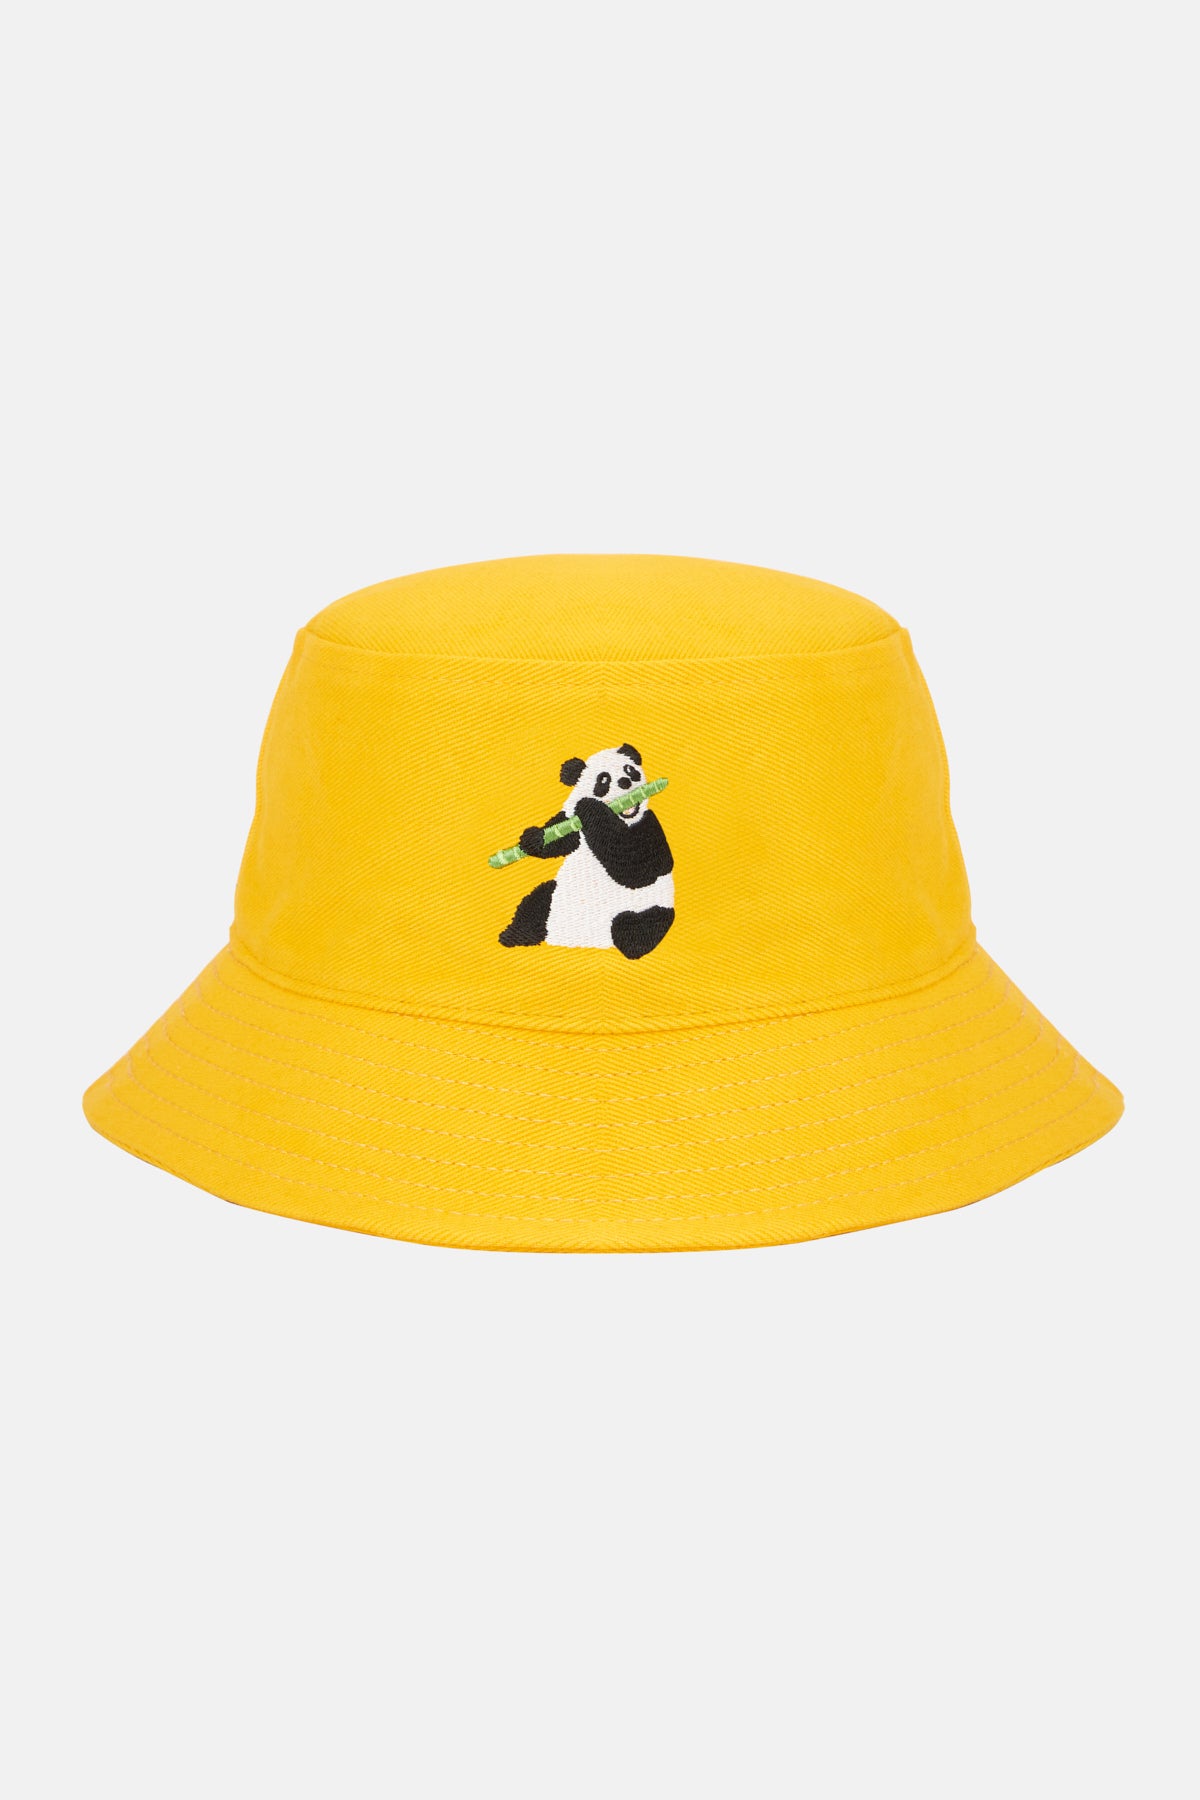 Reflect Studio // Bucket Hat // Panda // Gelb